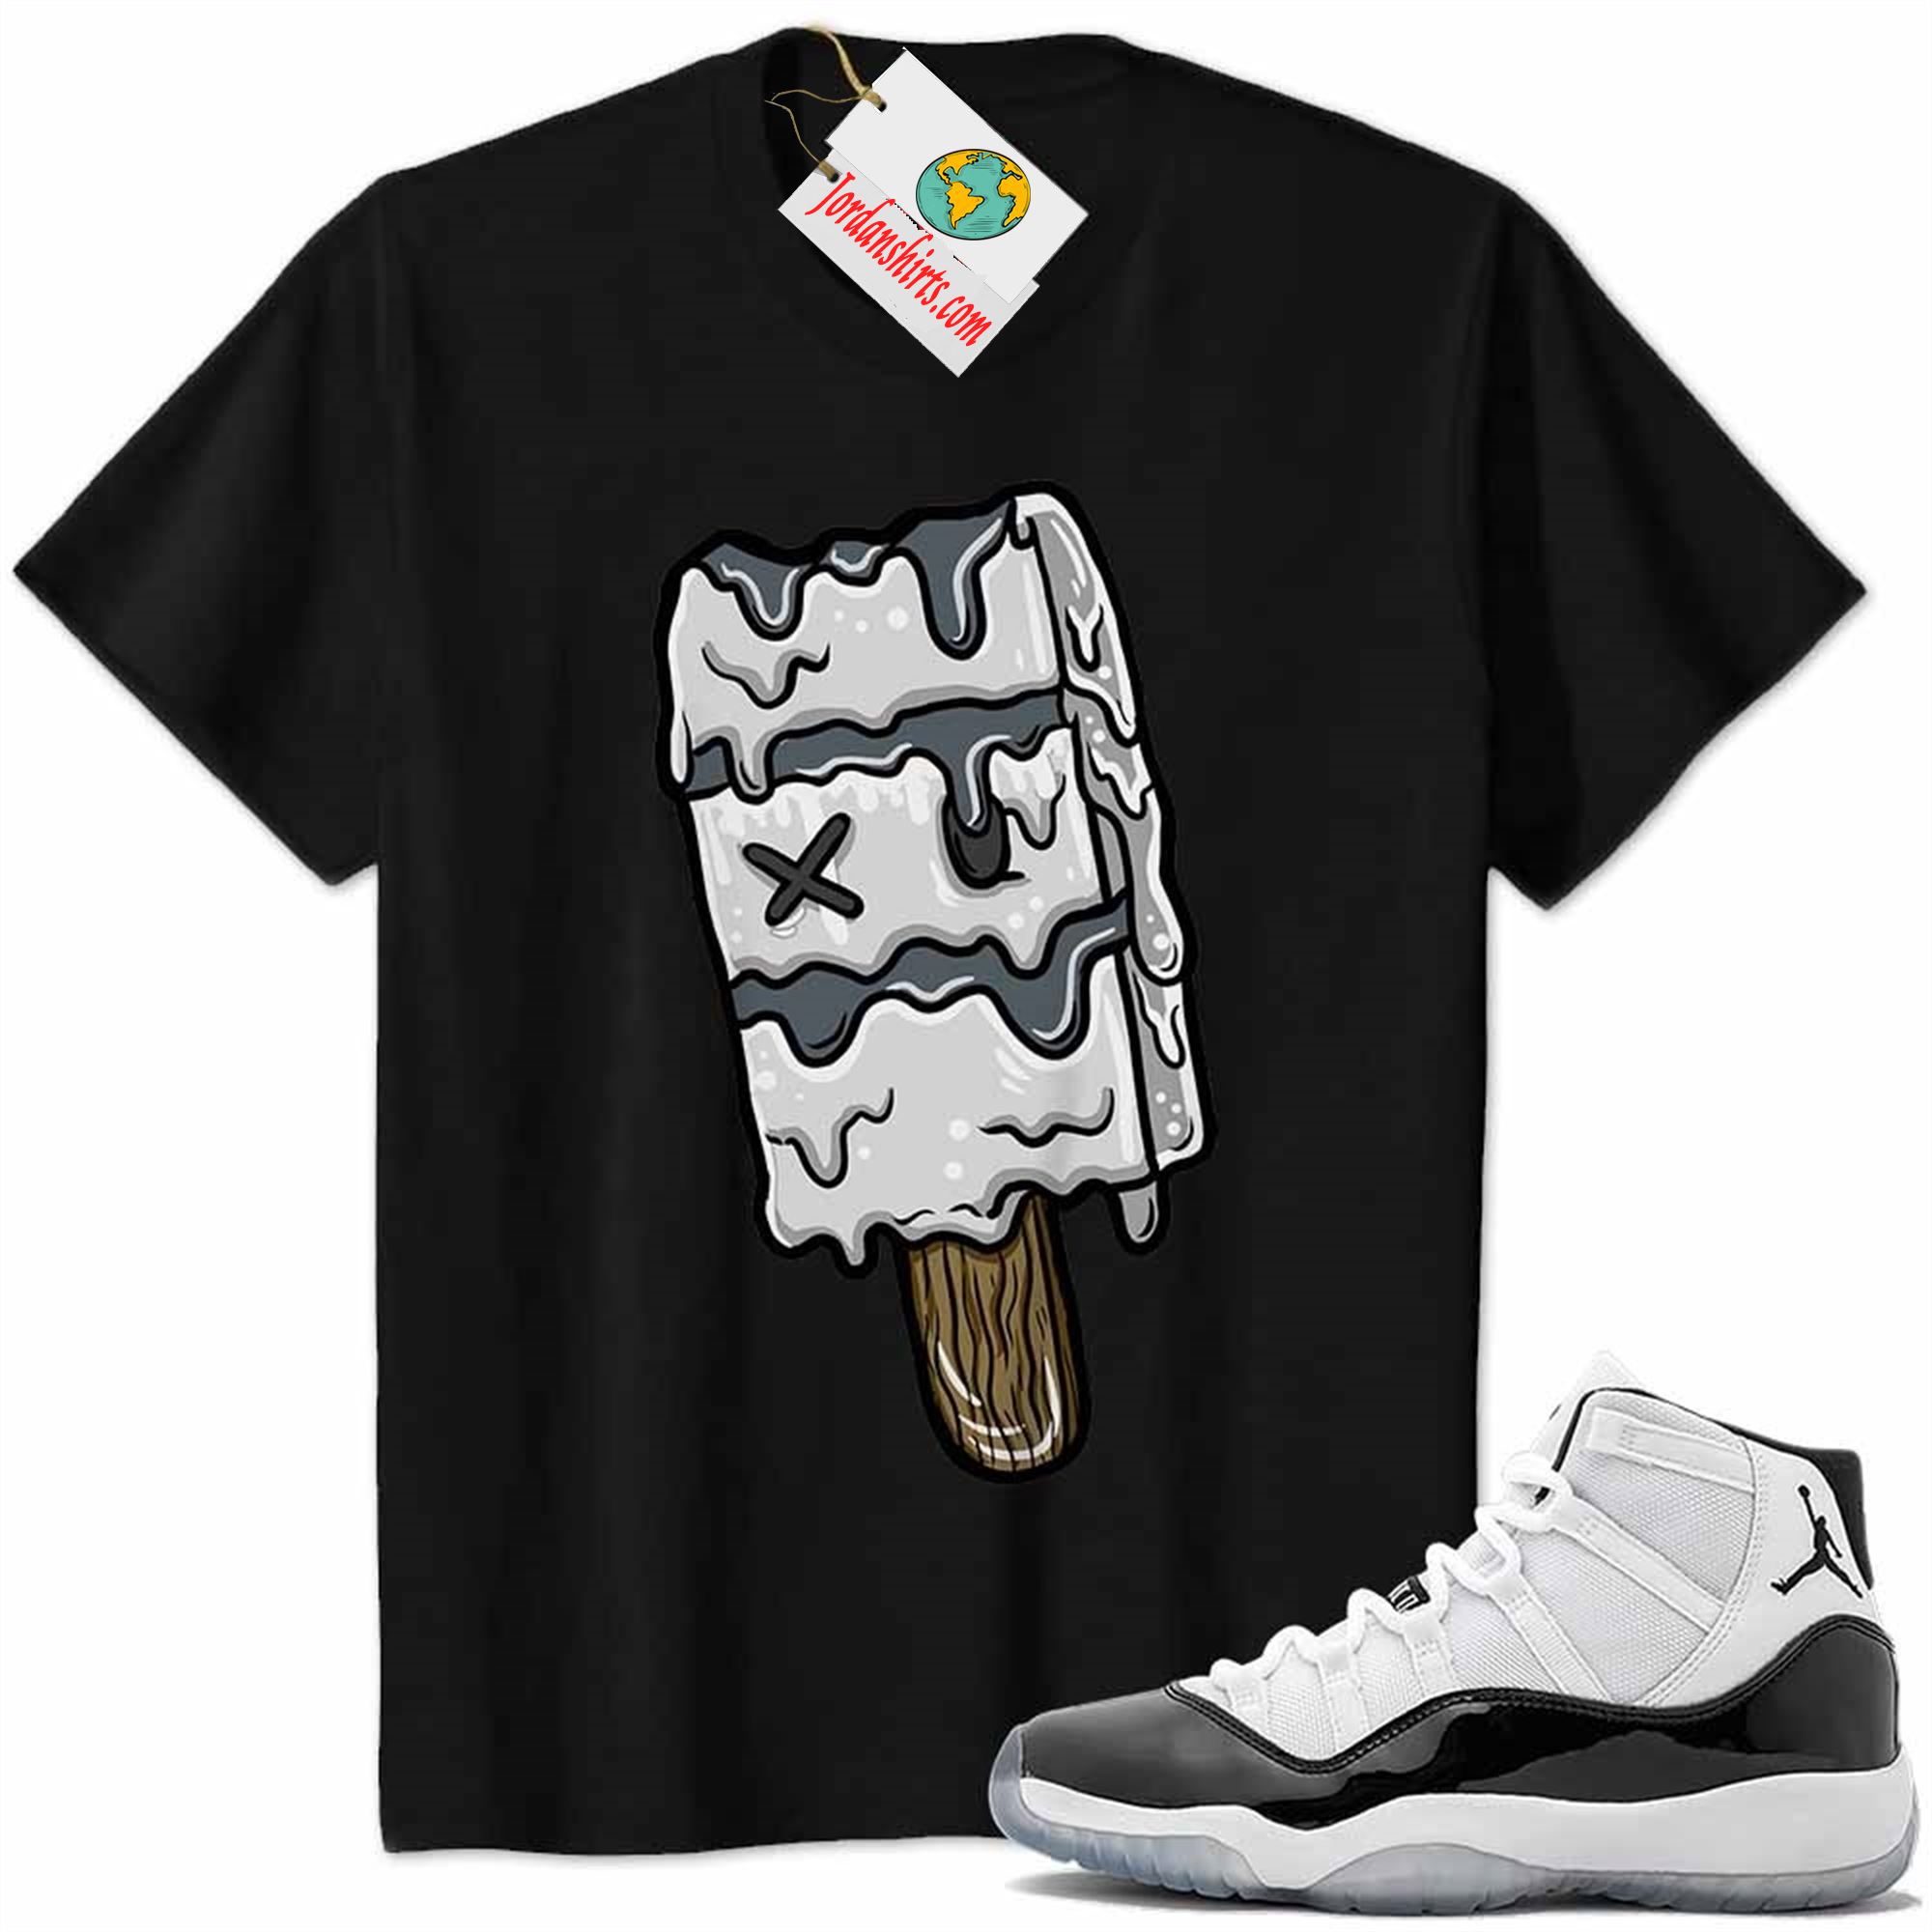 Jordan 11 Shirt, Ice Cream Dripping Black Air Jordan 11 Concord 11s Full Size Up To 5xl